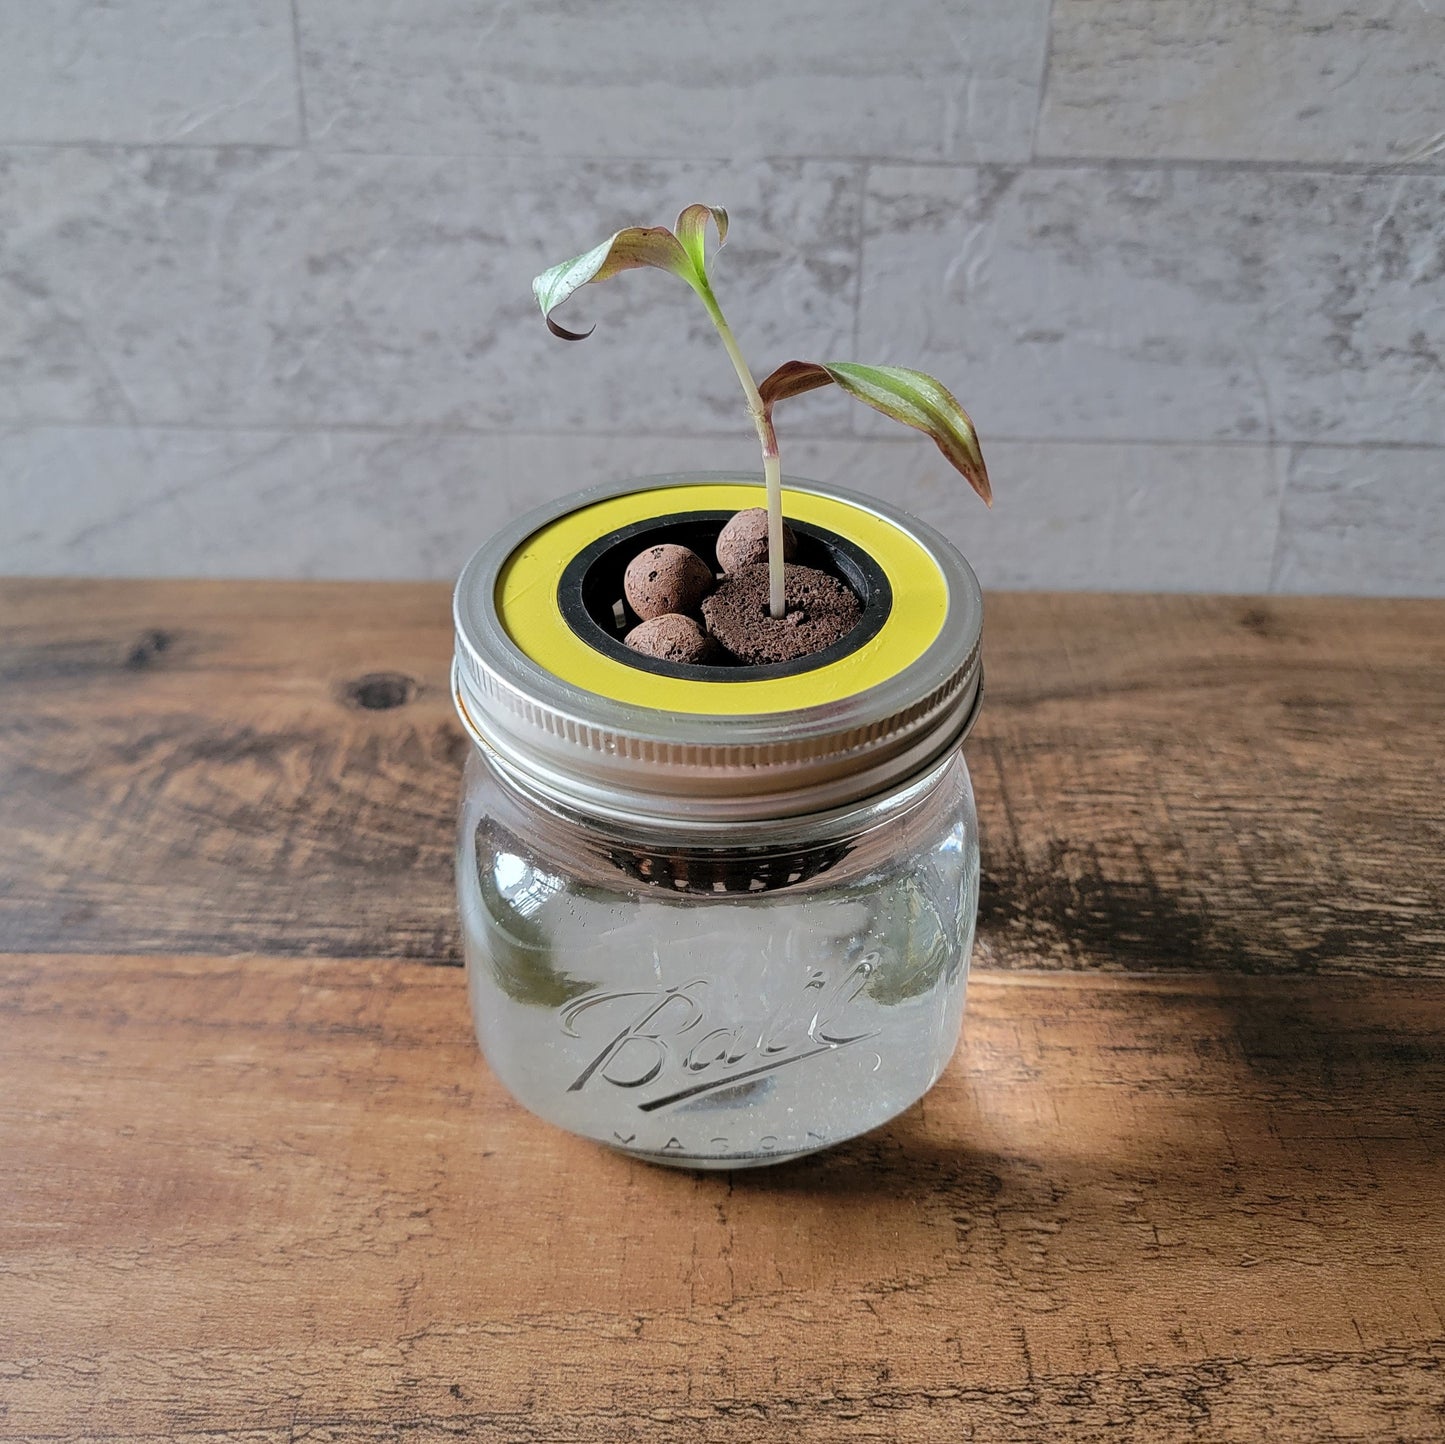 3D Printed Mason Jar Basket Hydroponics Lid Set of 2 - Grow Kit - Kratky Jar - Wide Mouth Mason Jar Lid